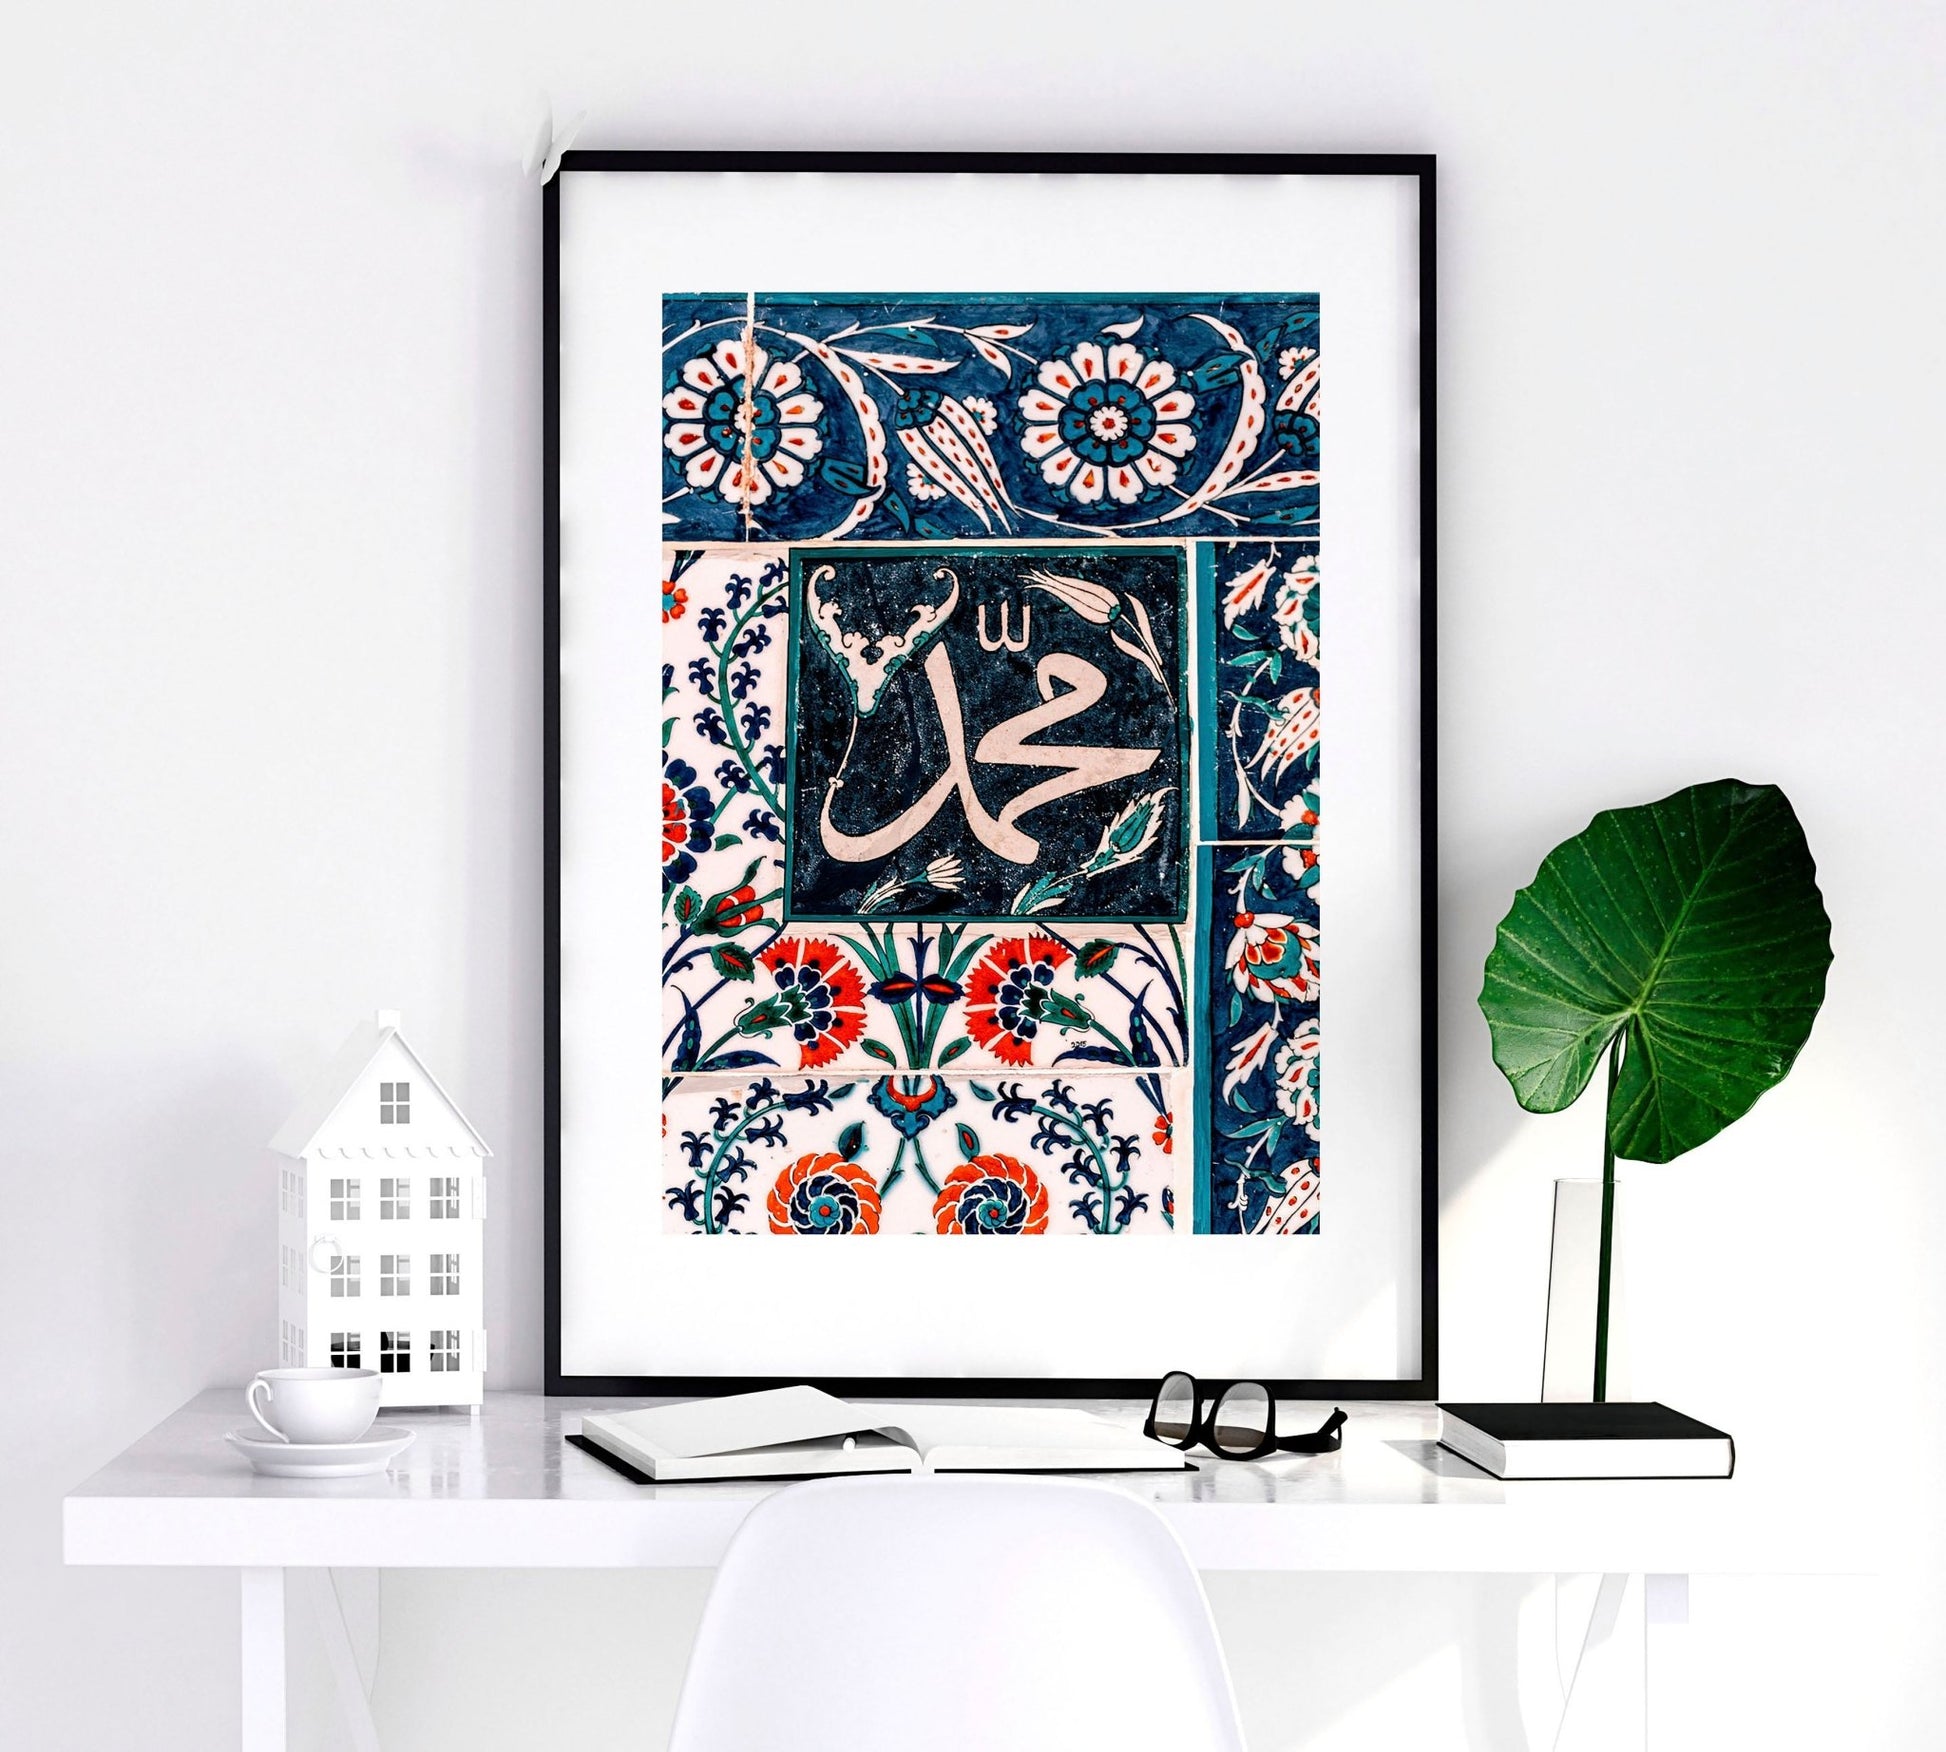 Islamic decor wall art | set of 3 wall art prints - About Wall Art